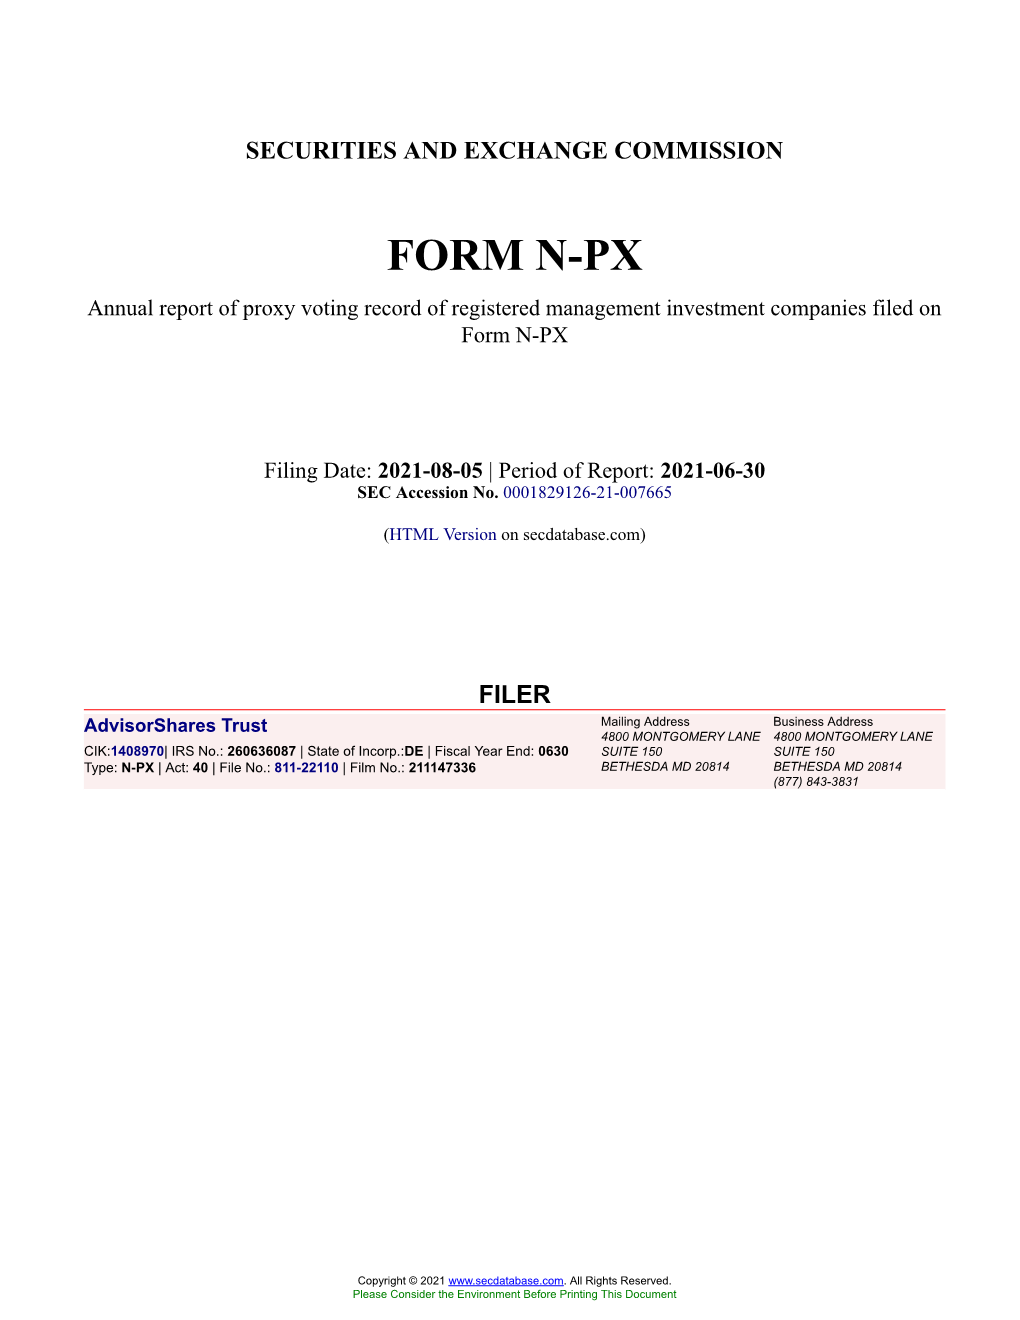 Advisorshares Trust Form N-PX Filed 2021-08-05